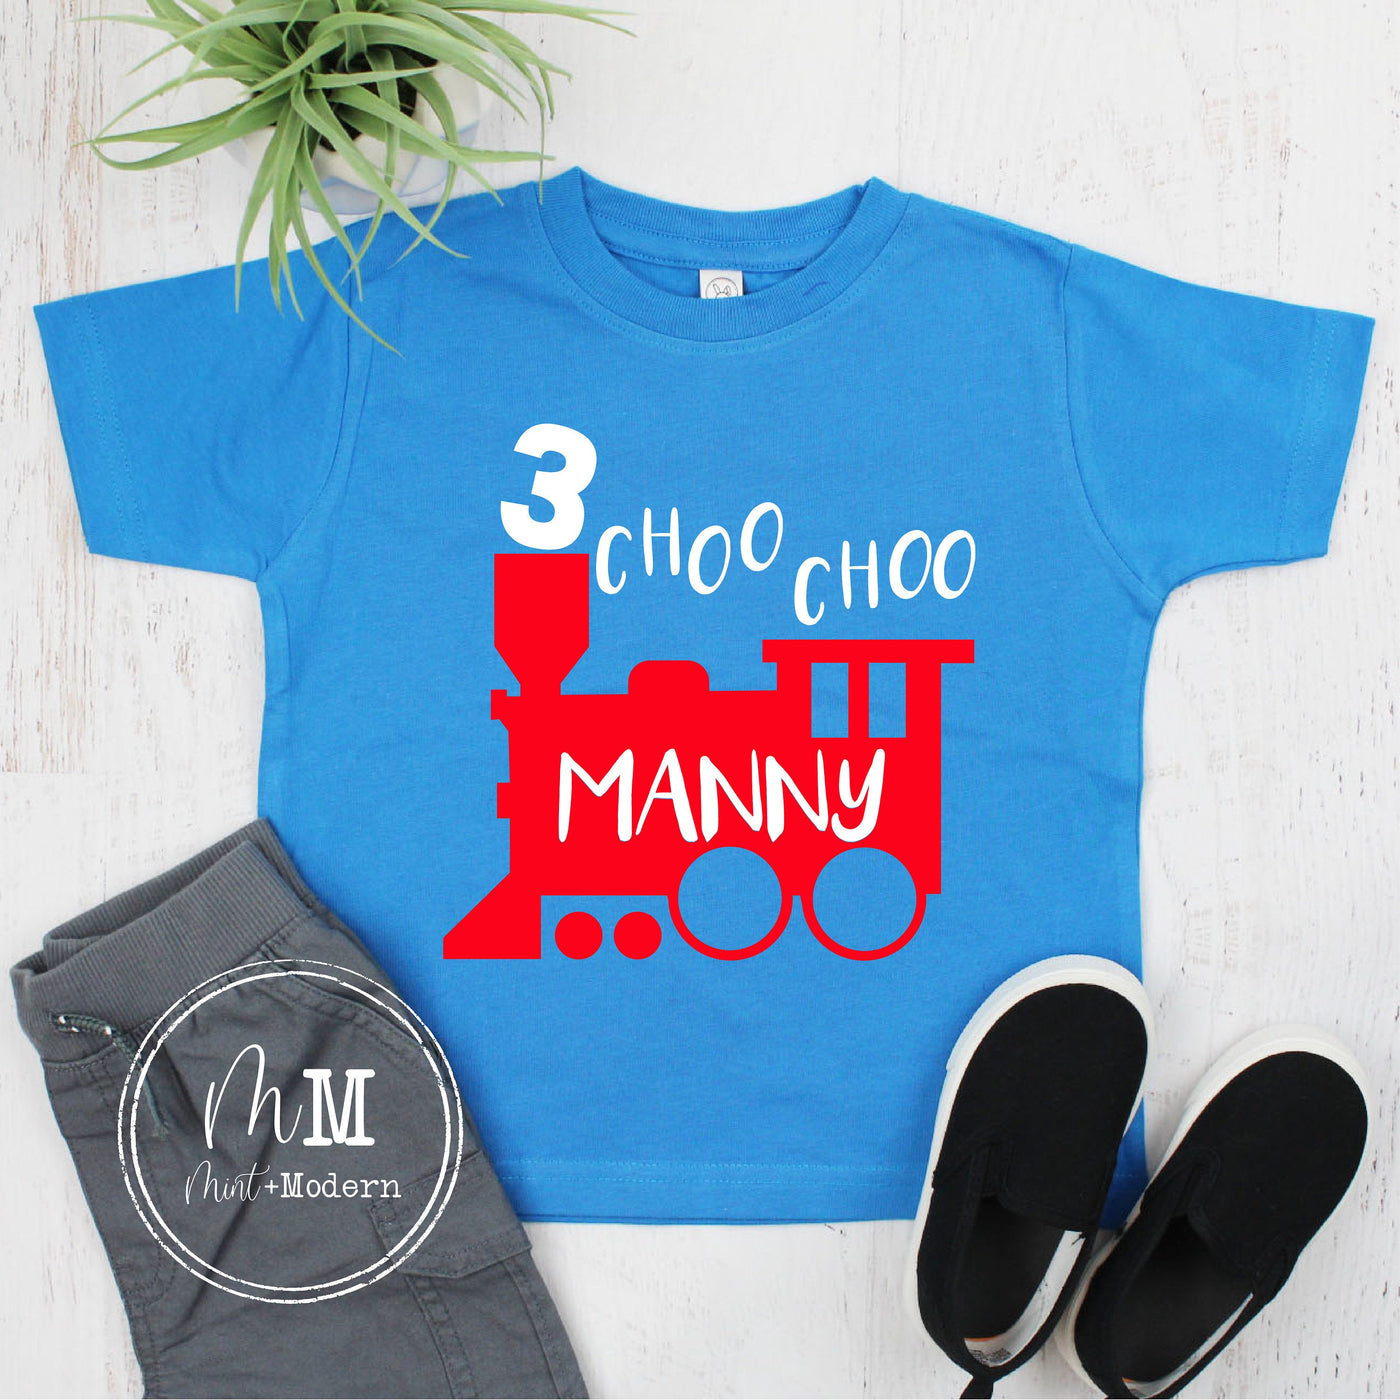 Choo Choo I'm Three Train Toddler Boy's Birthday Shirt